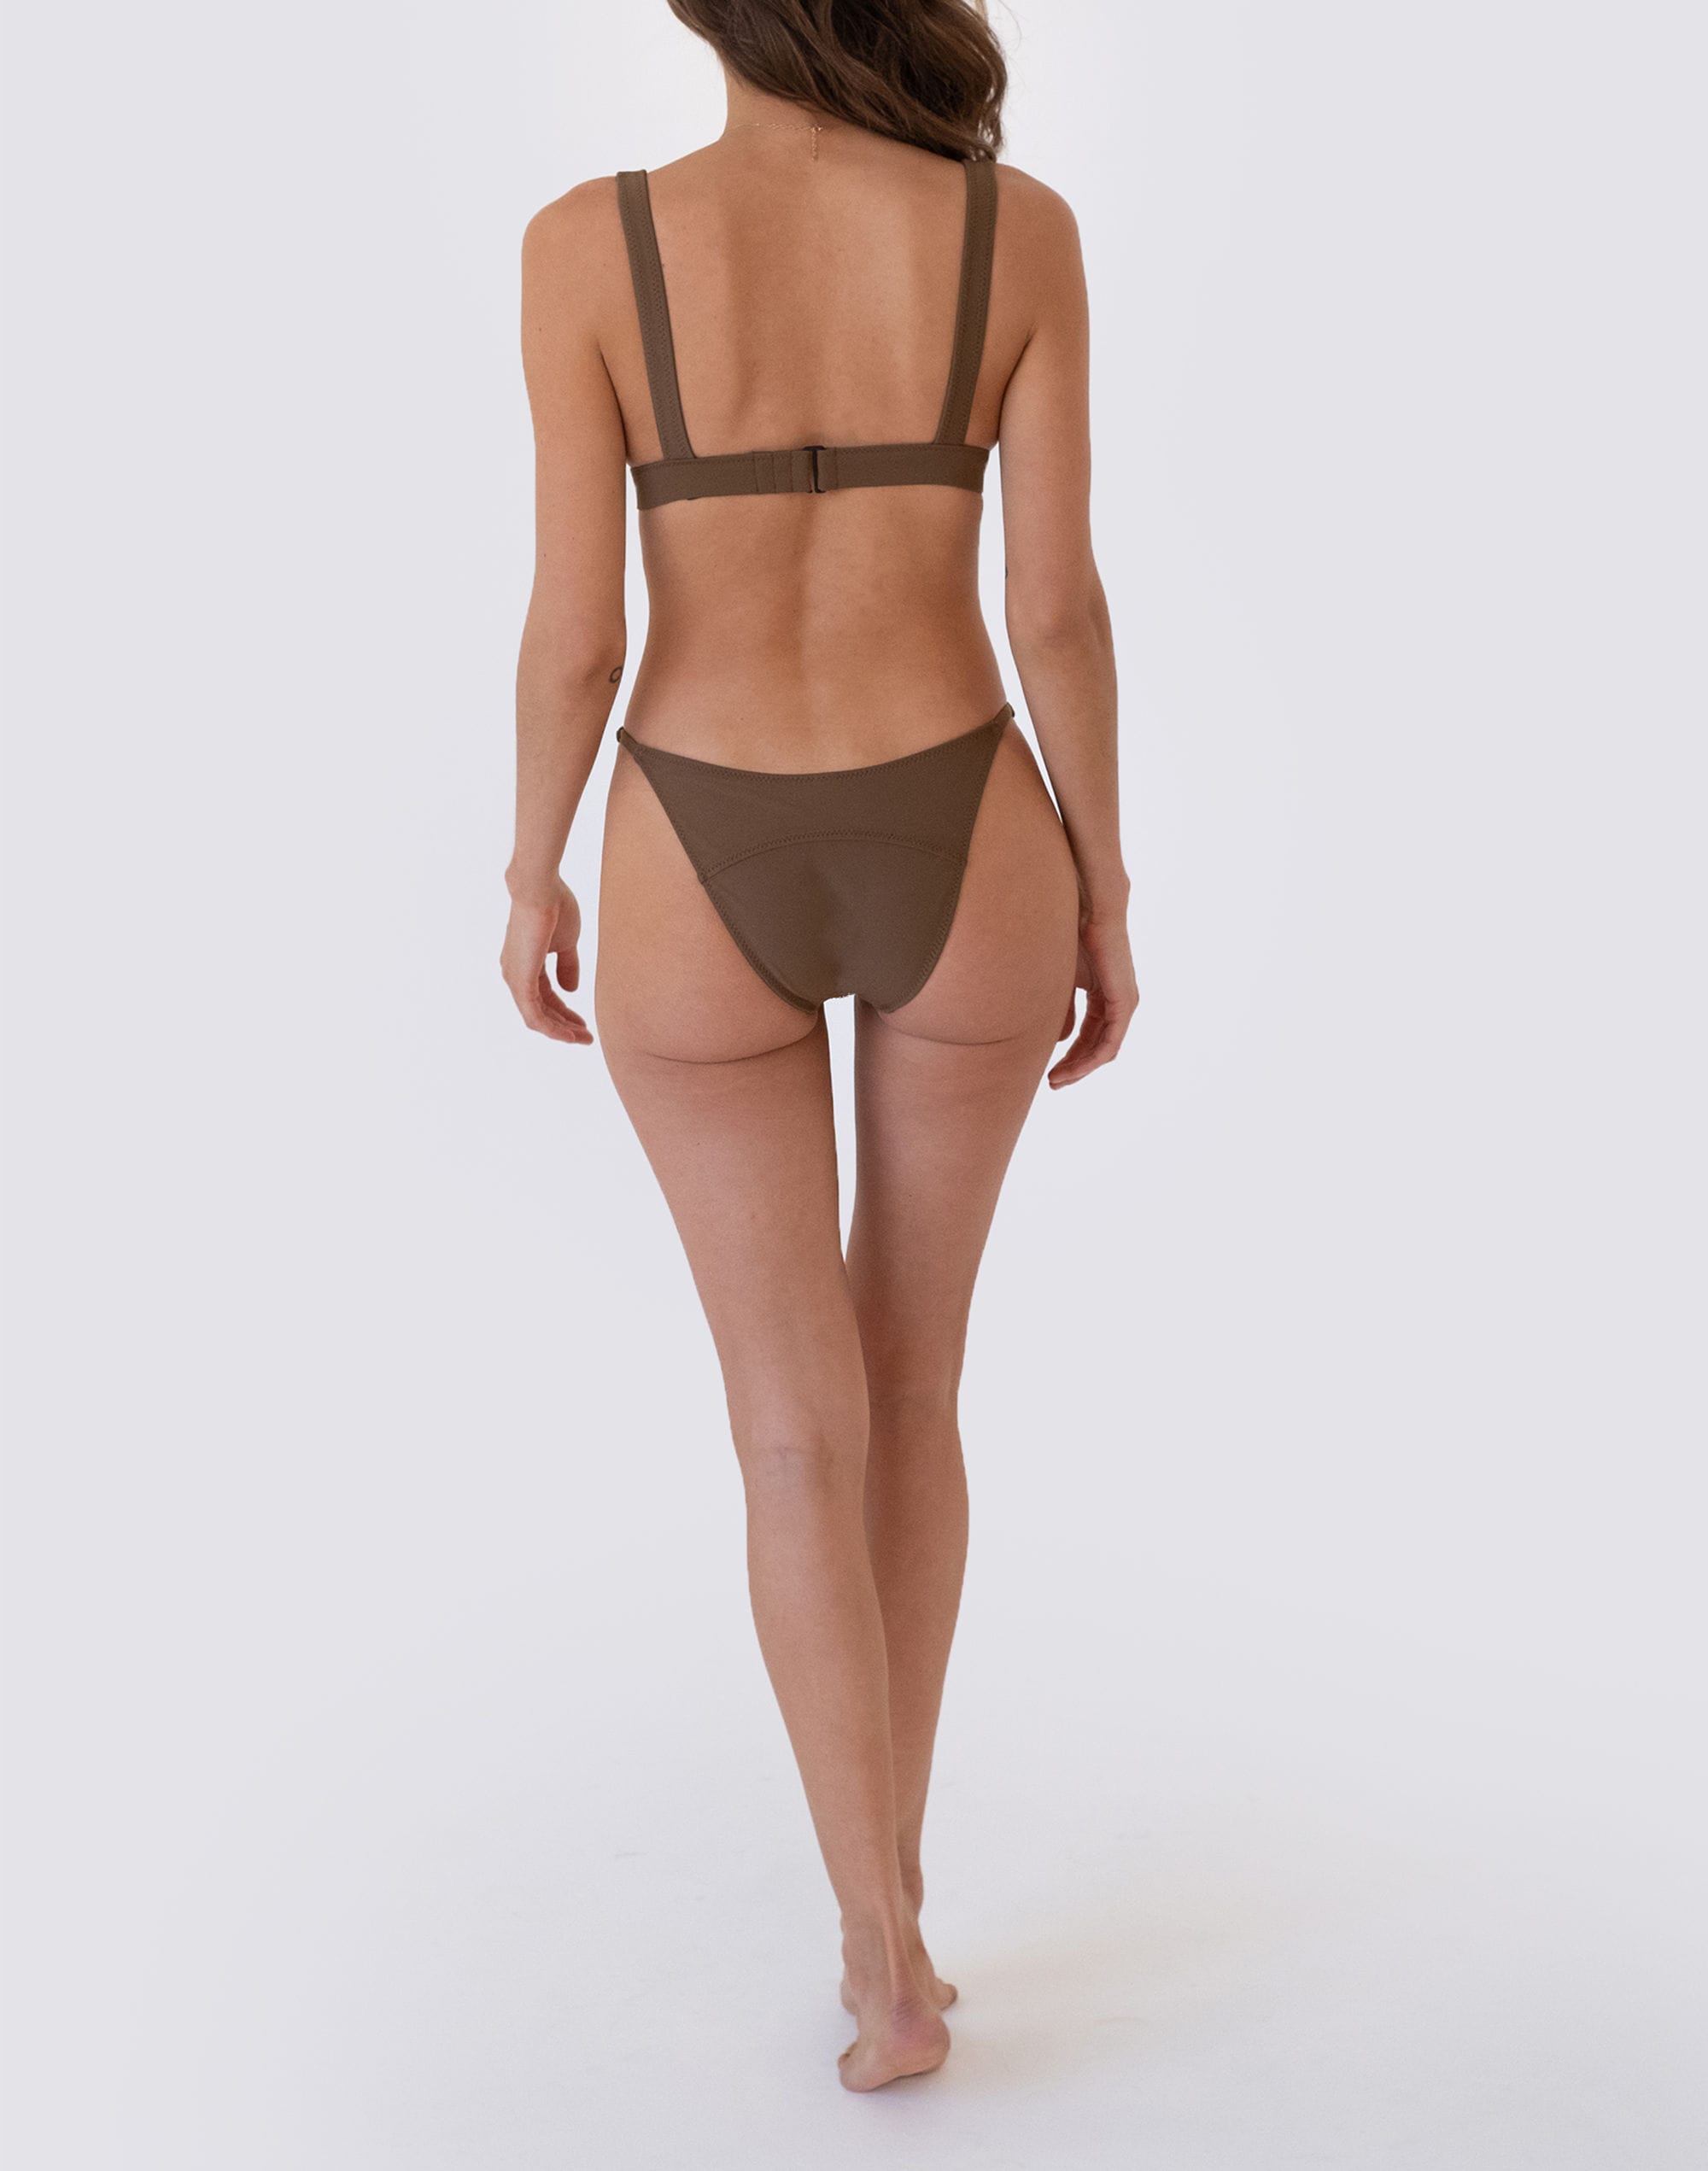 GALAMAAR® Slim Brief Bikini Bottom